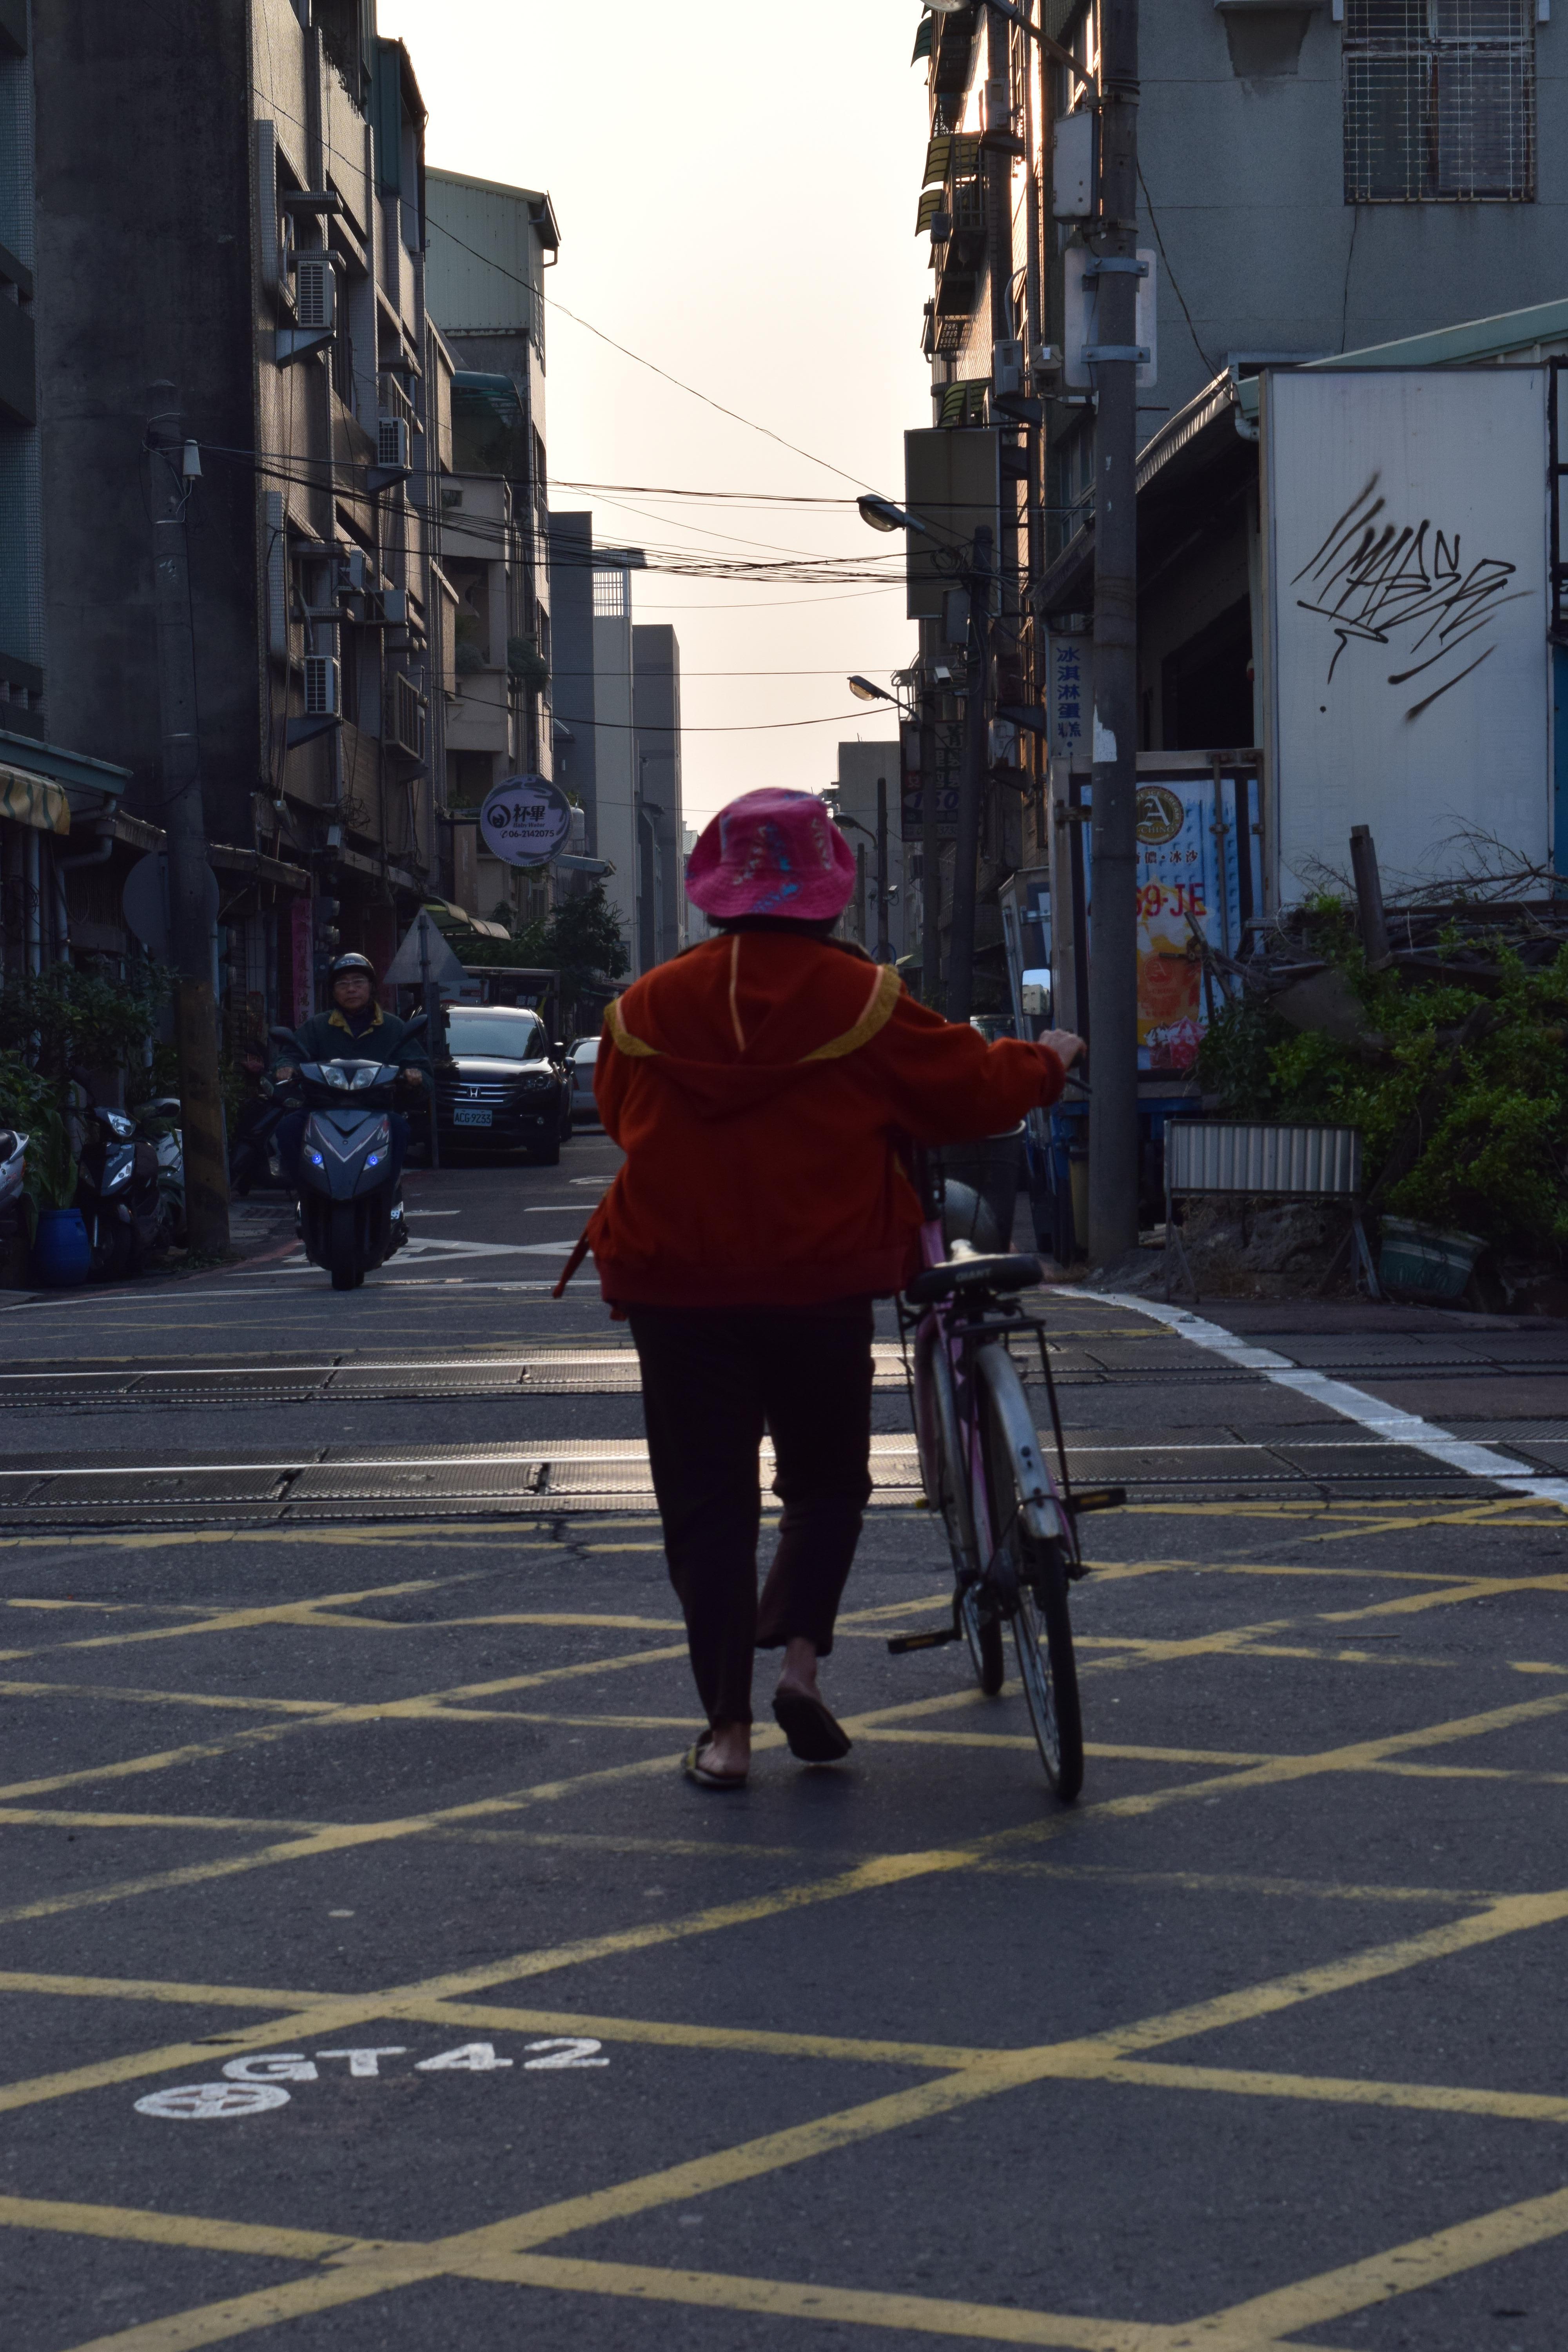 Carleigh Thomas Color Photograph - PHOTOGRAPH - Print on Handmade Paper - Tainan, Taiwan - Street Photography, City